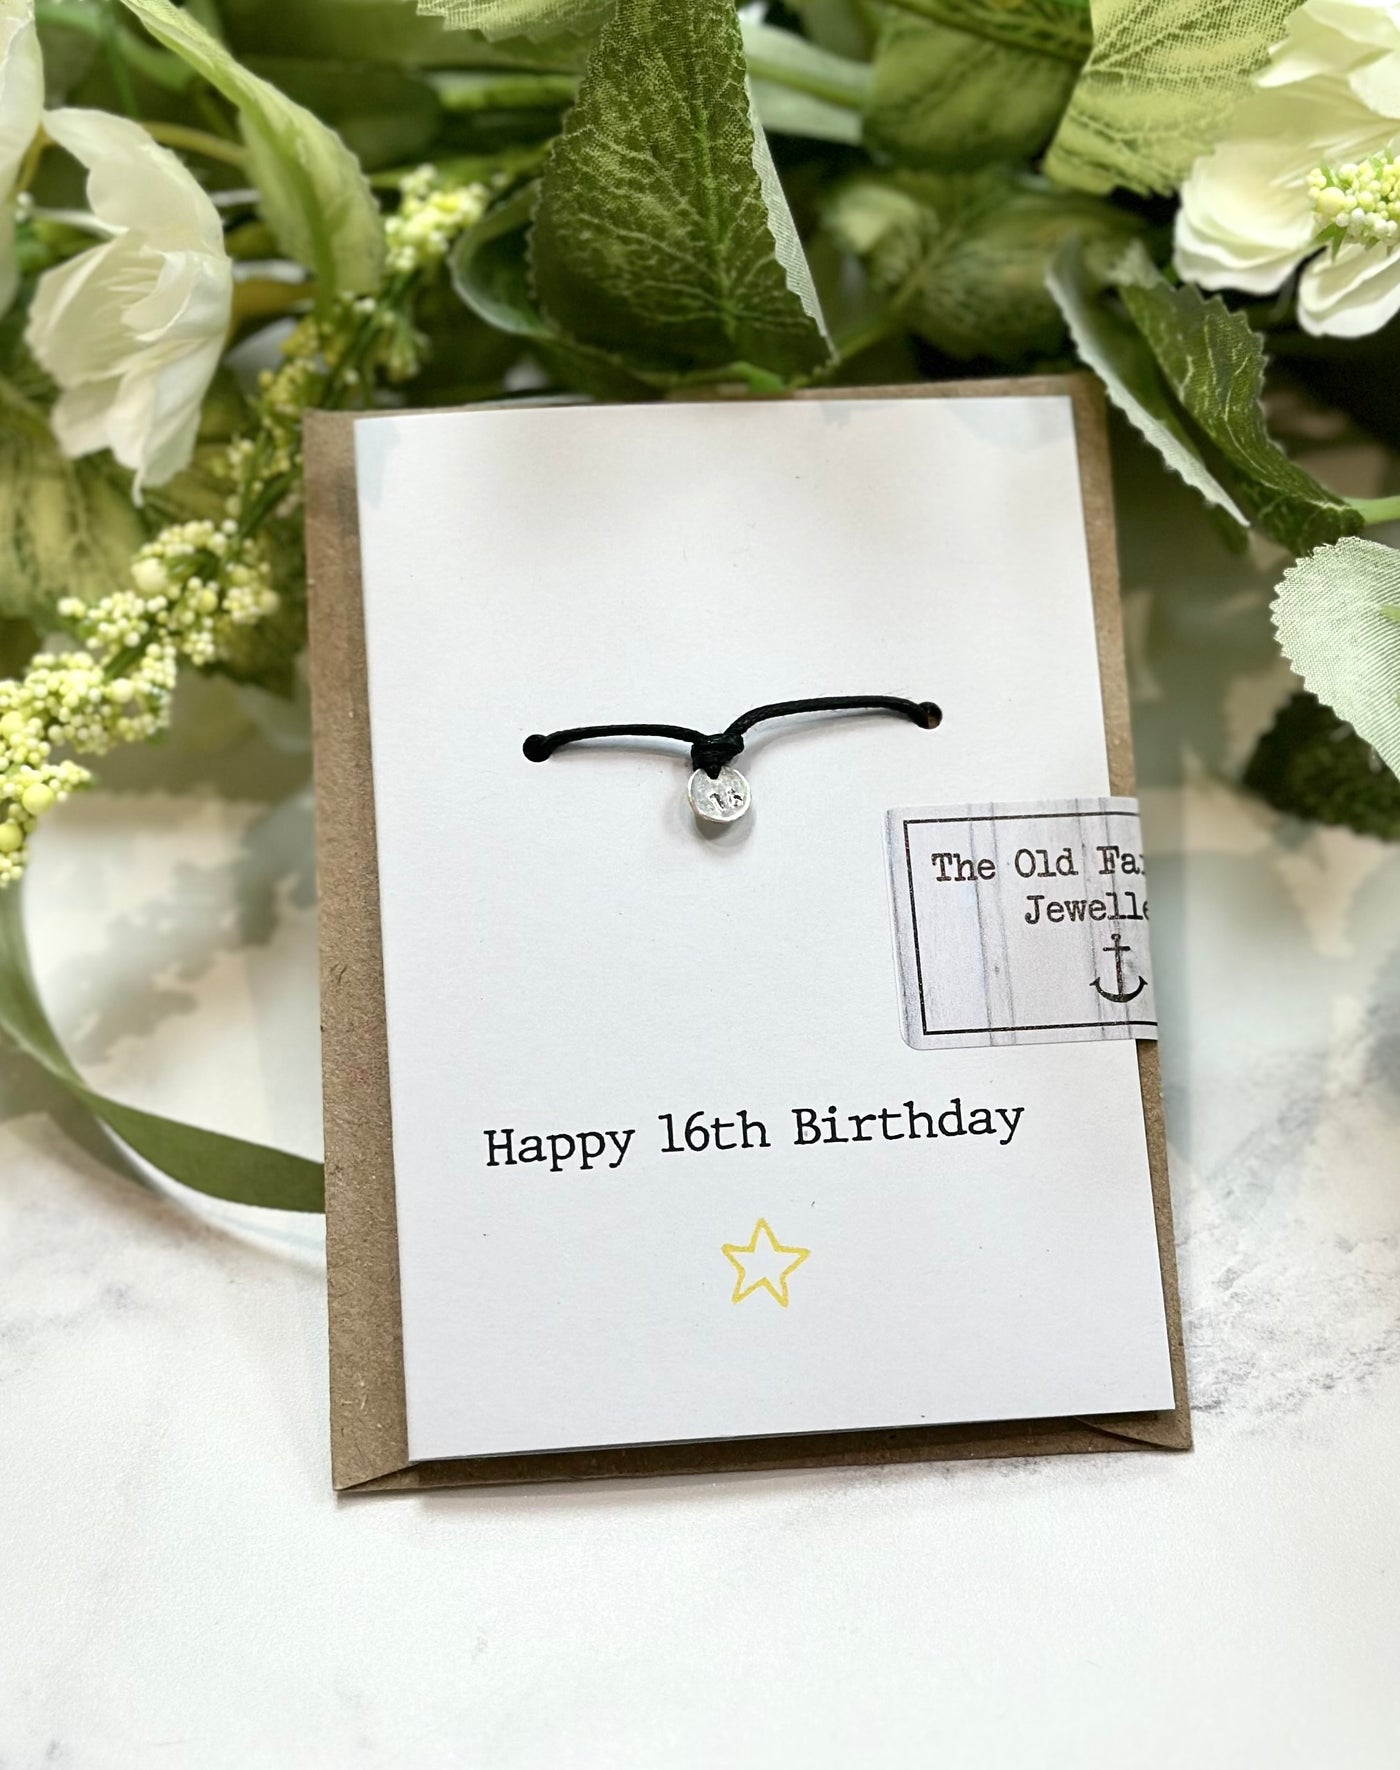 Happy 16th Birthday - 16 Stamped Disc Black Cord Wish Bracelet